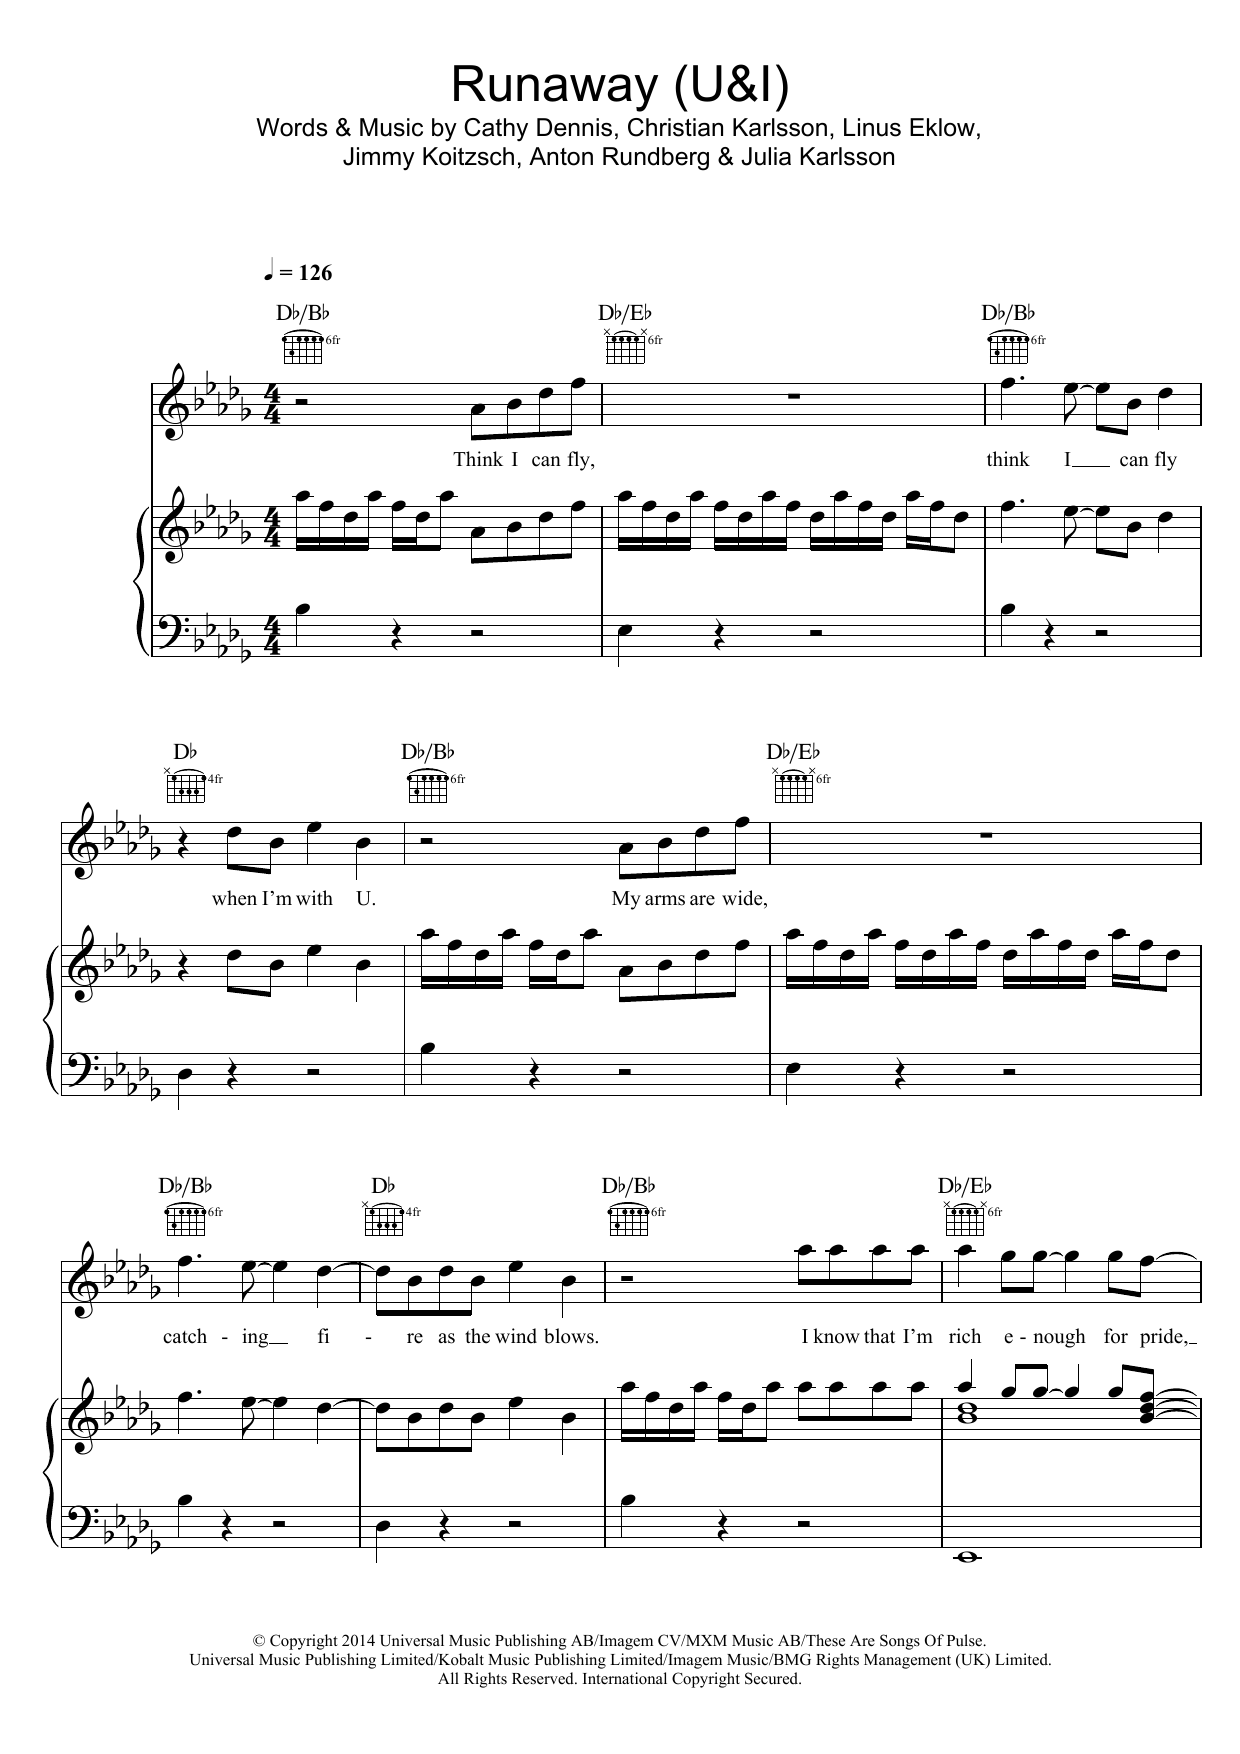 Galantis Runaway (U & I) Sheet Music Notes & Chords for Piano, Vocal & Guitar (Right-Hand Melody) - Download or Print PDF